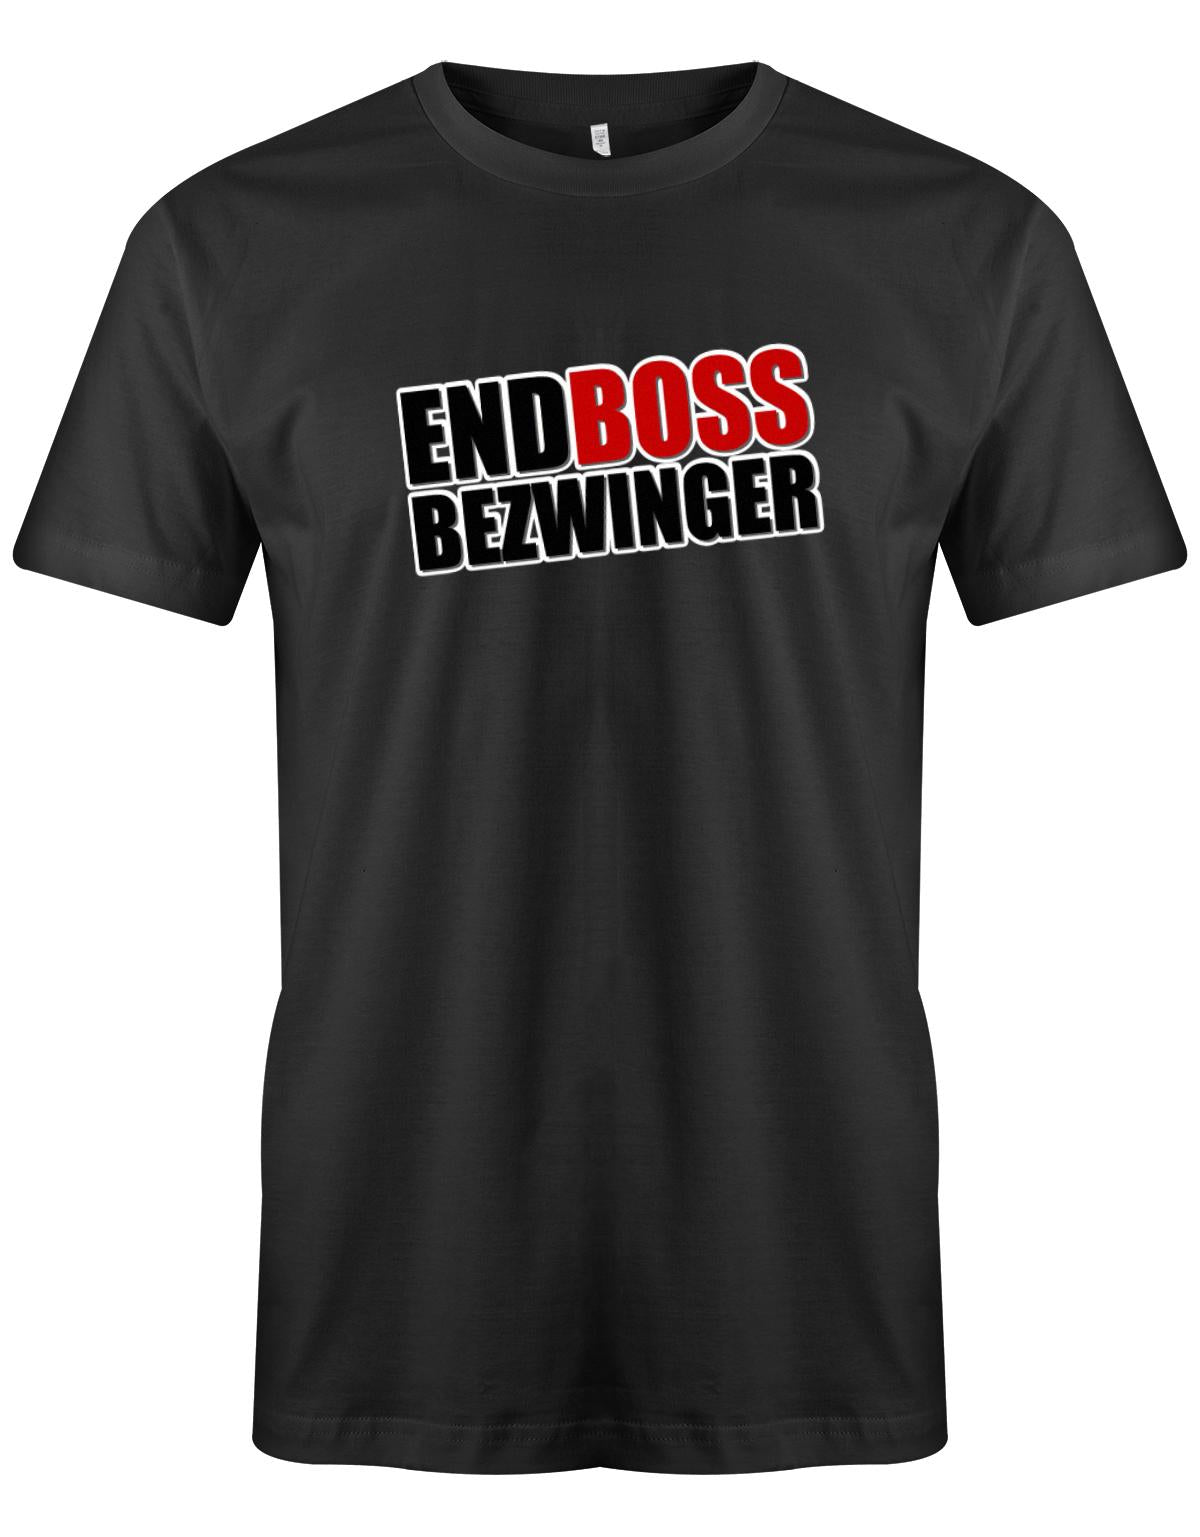 Endboss-Bezwinger-Gamer-Herren-Shirt-Schwarz